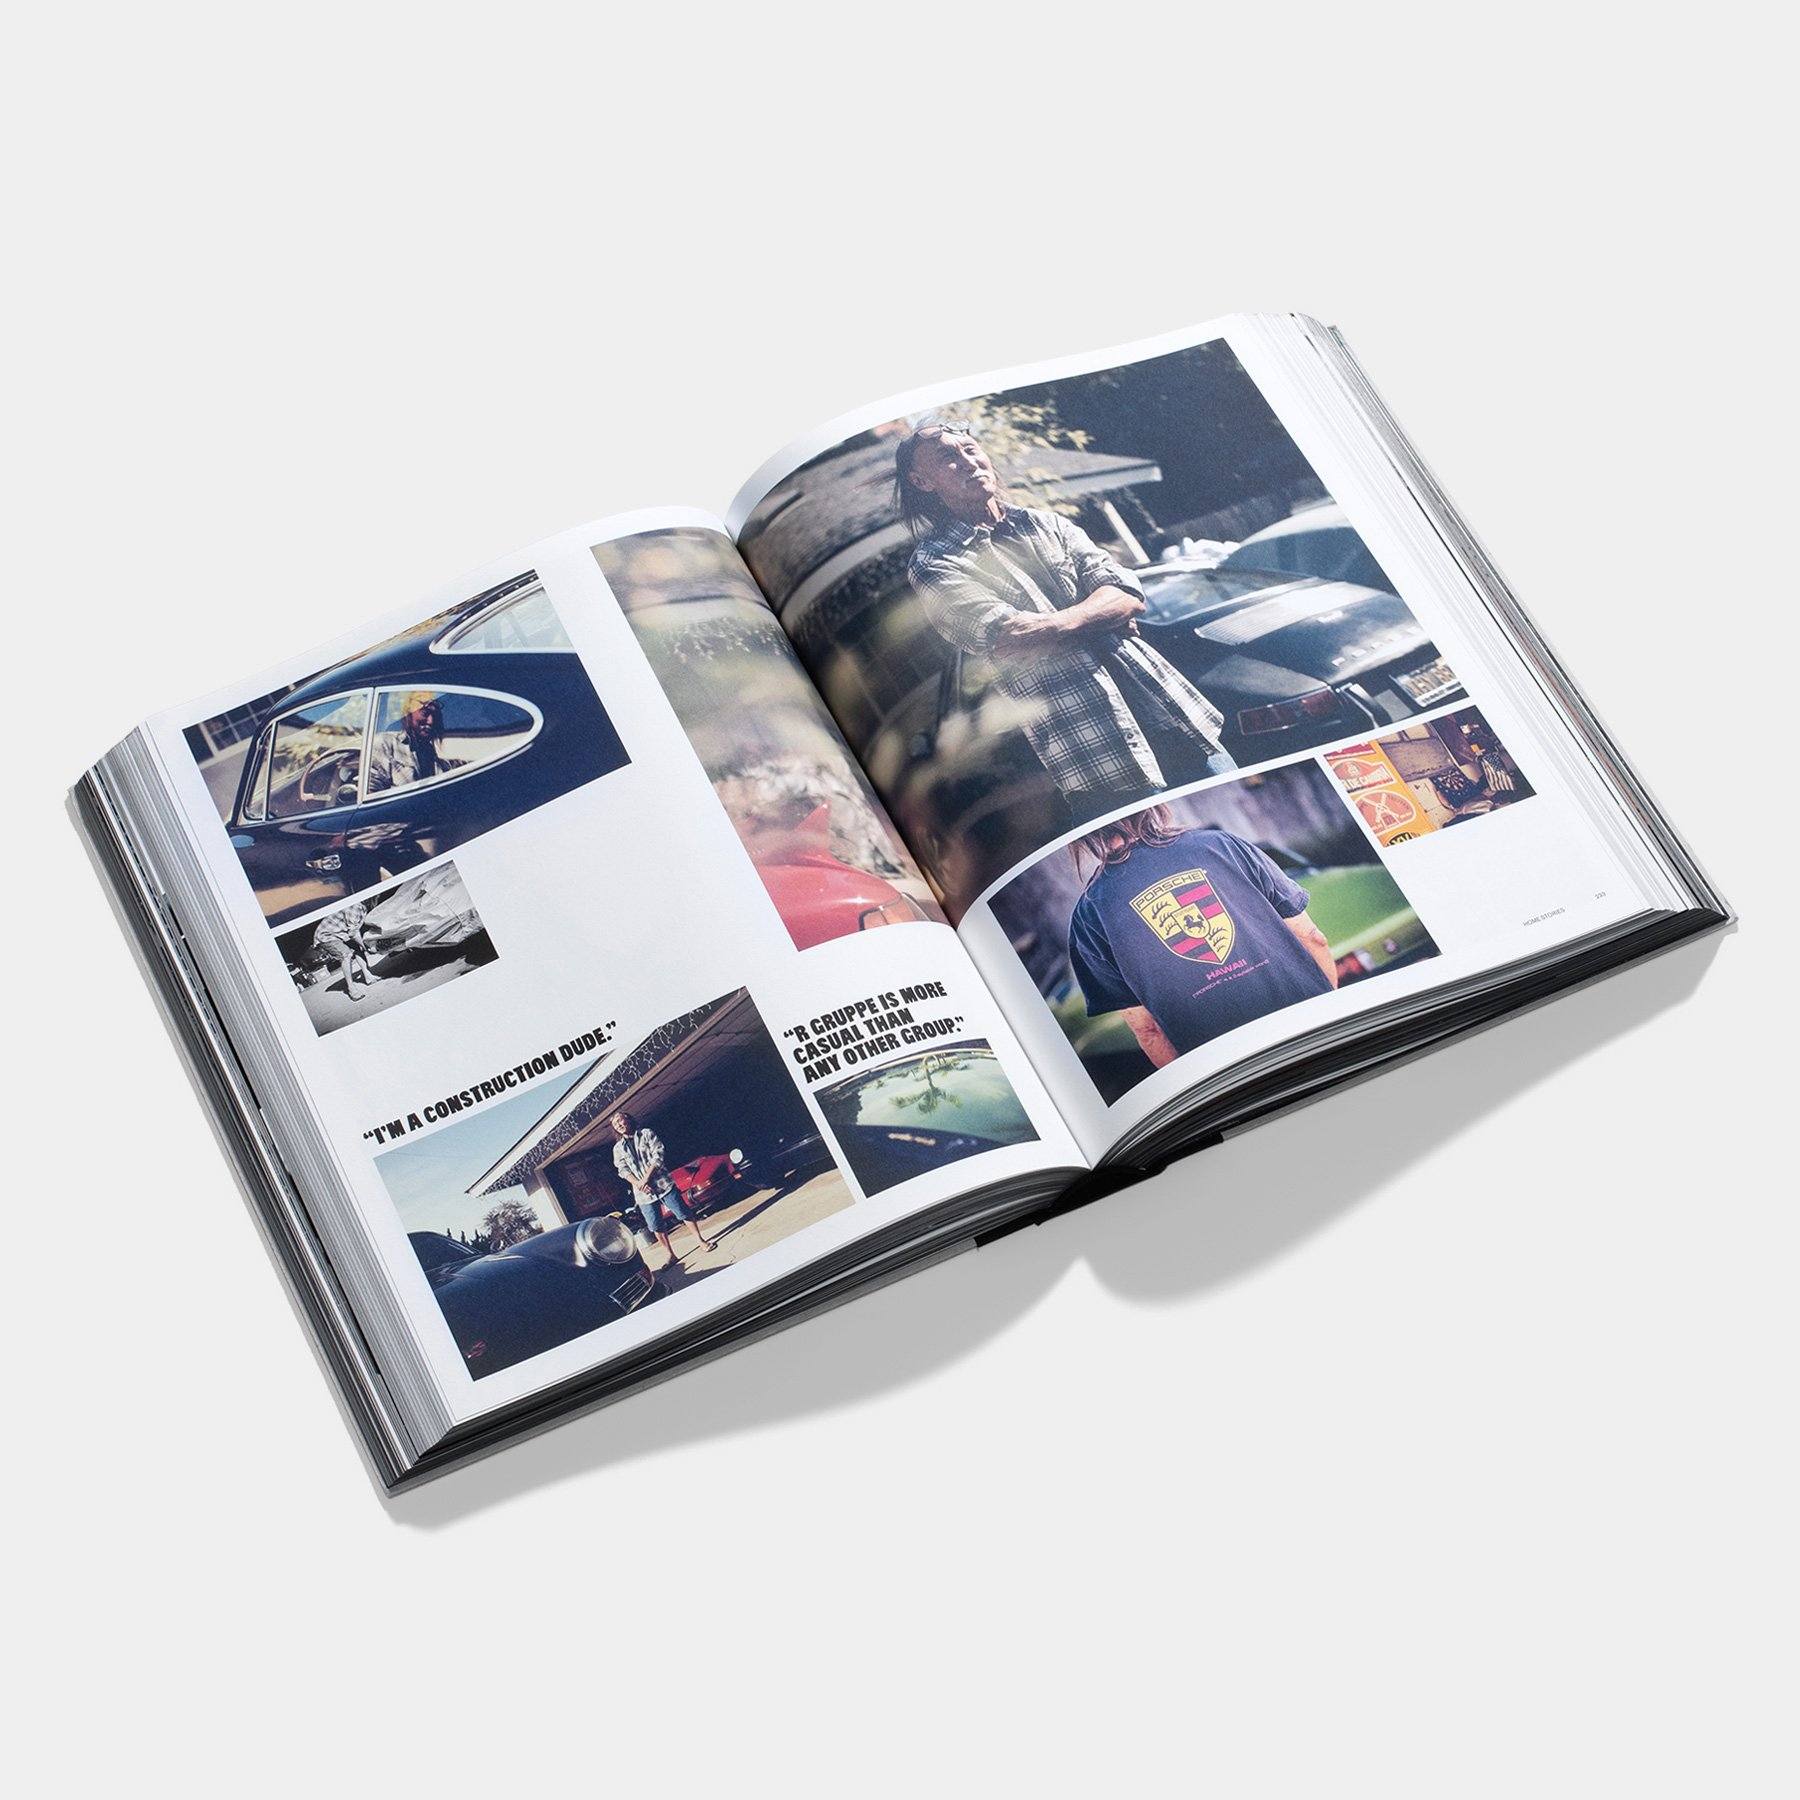 The R-Gruppe Book - Limited Edition 700 piece, Porsche 911, 993, 914, Frank Kayser